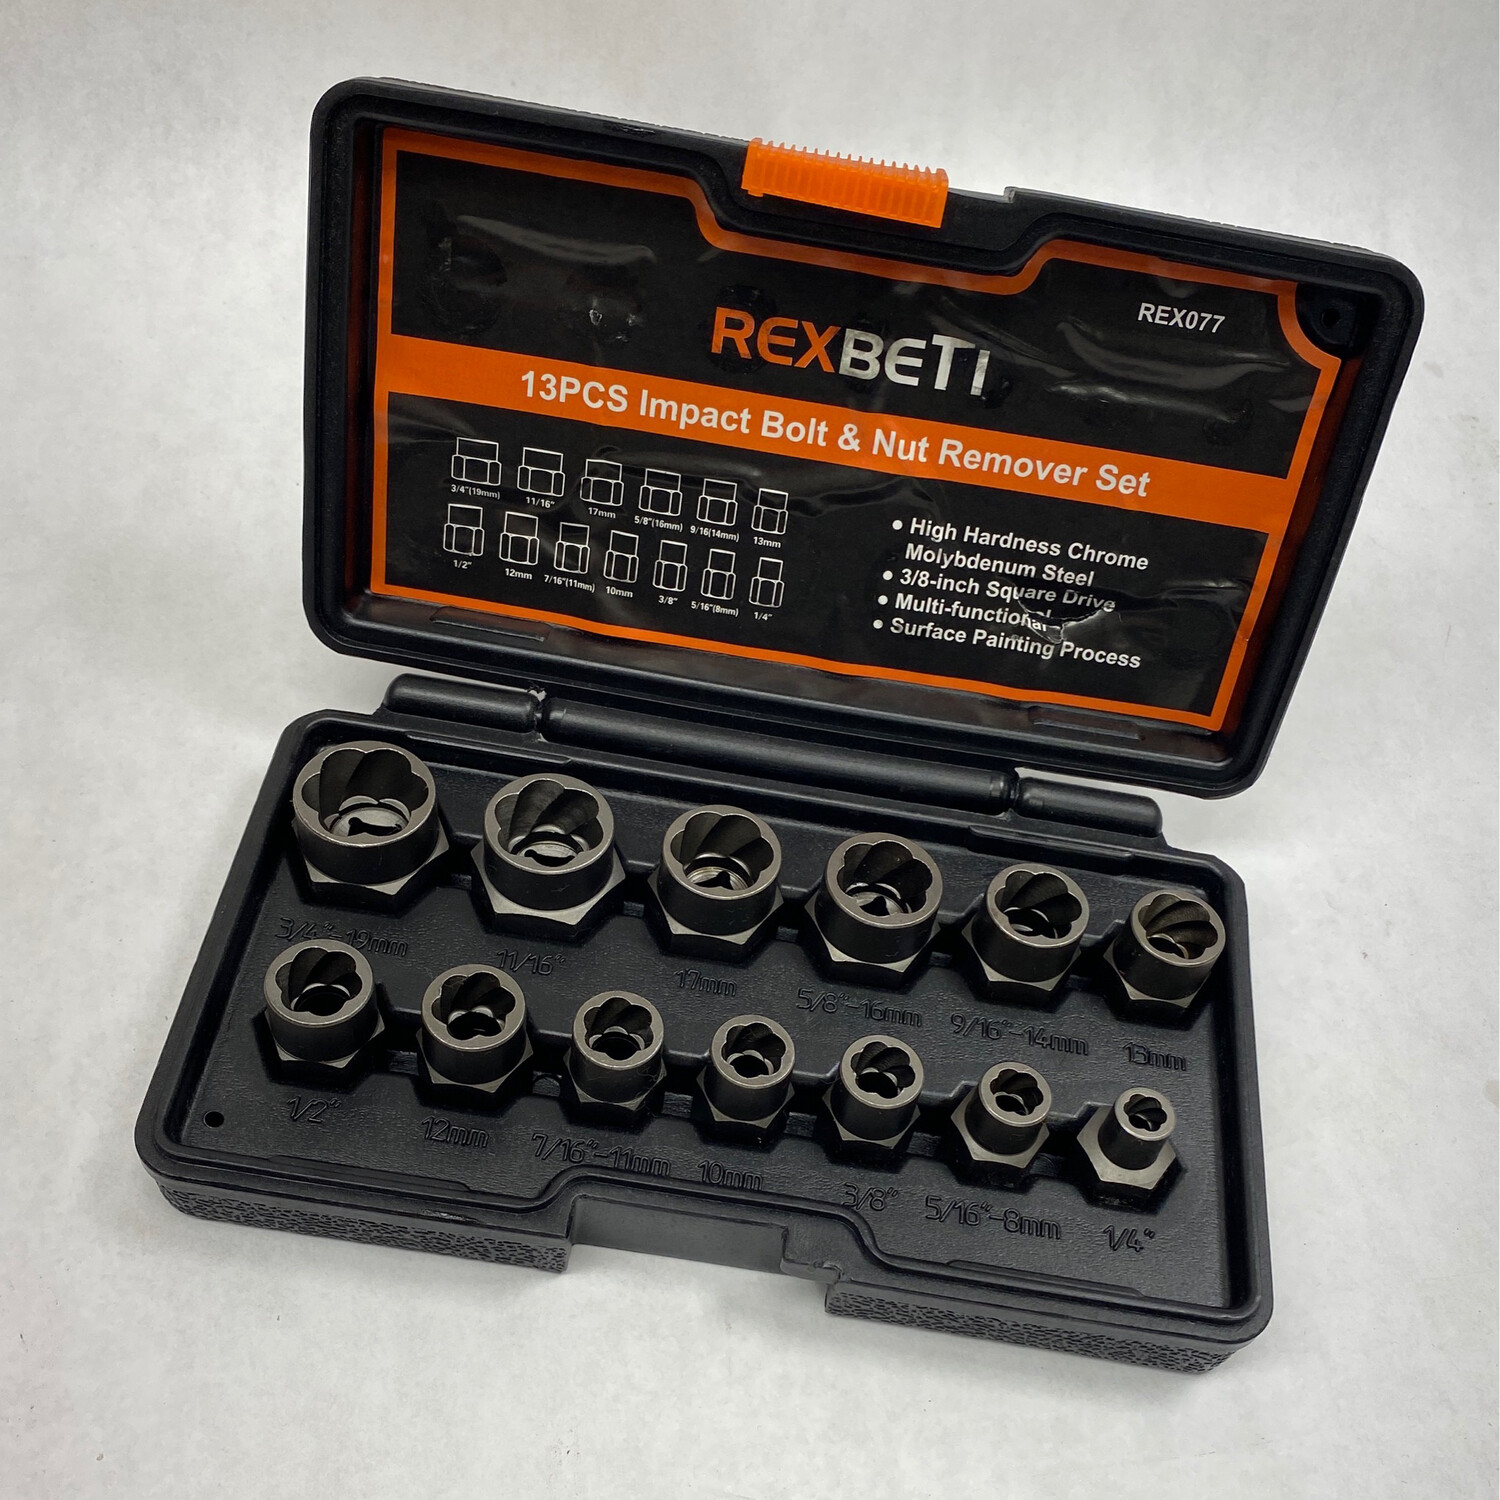 Rexbeti 13pc Impact Bolt & Nut Remover Set